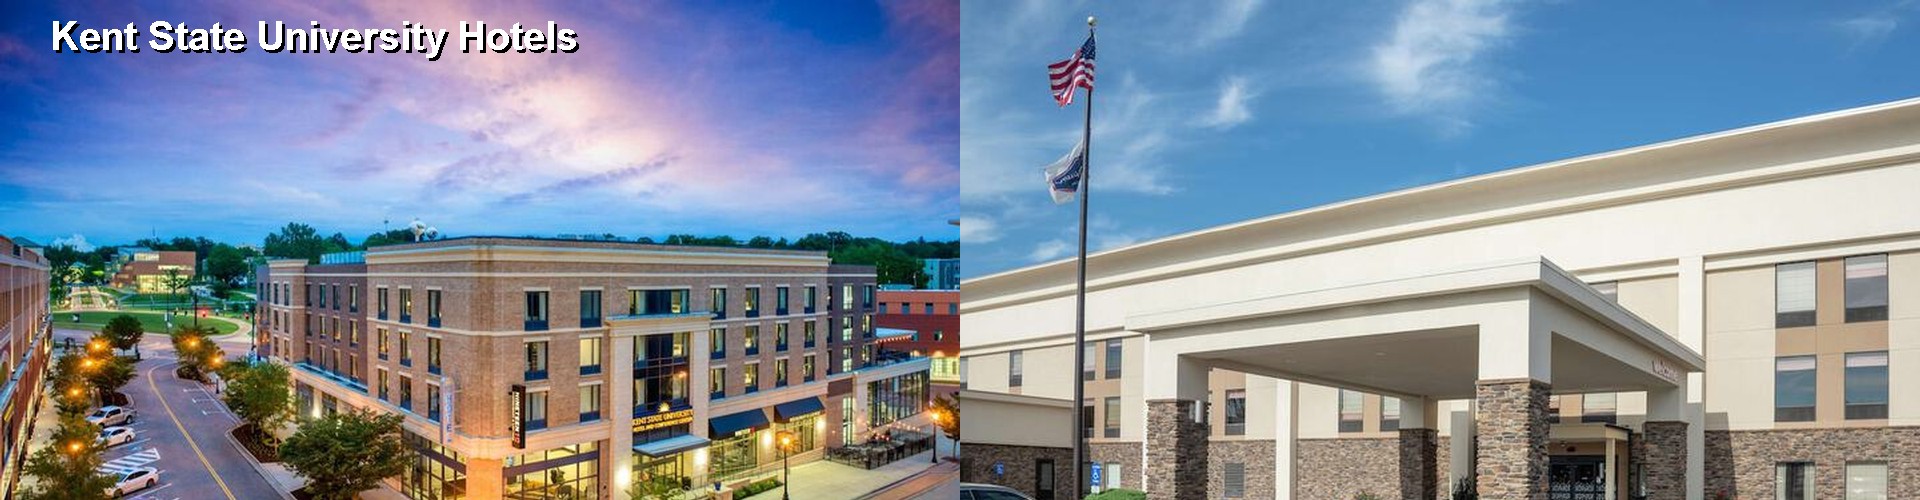 5 Best Hotels near Kent State University